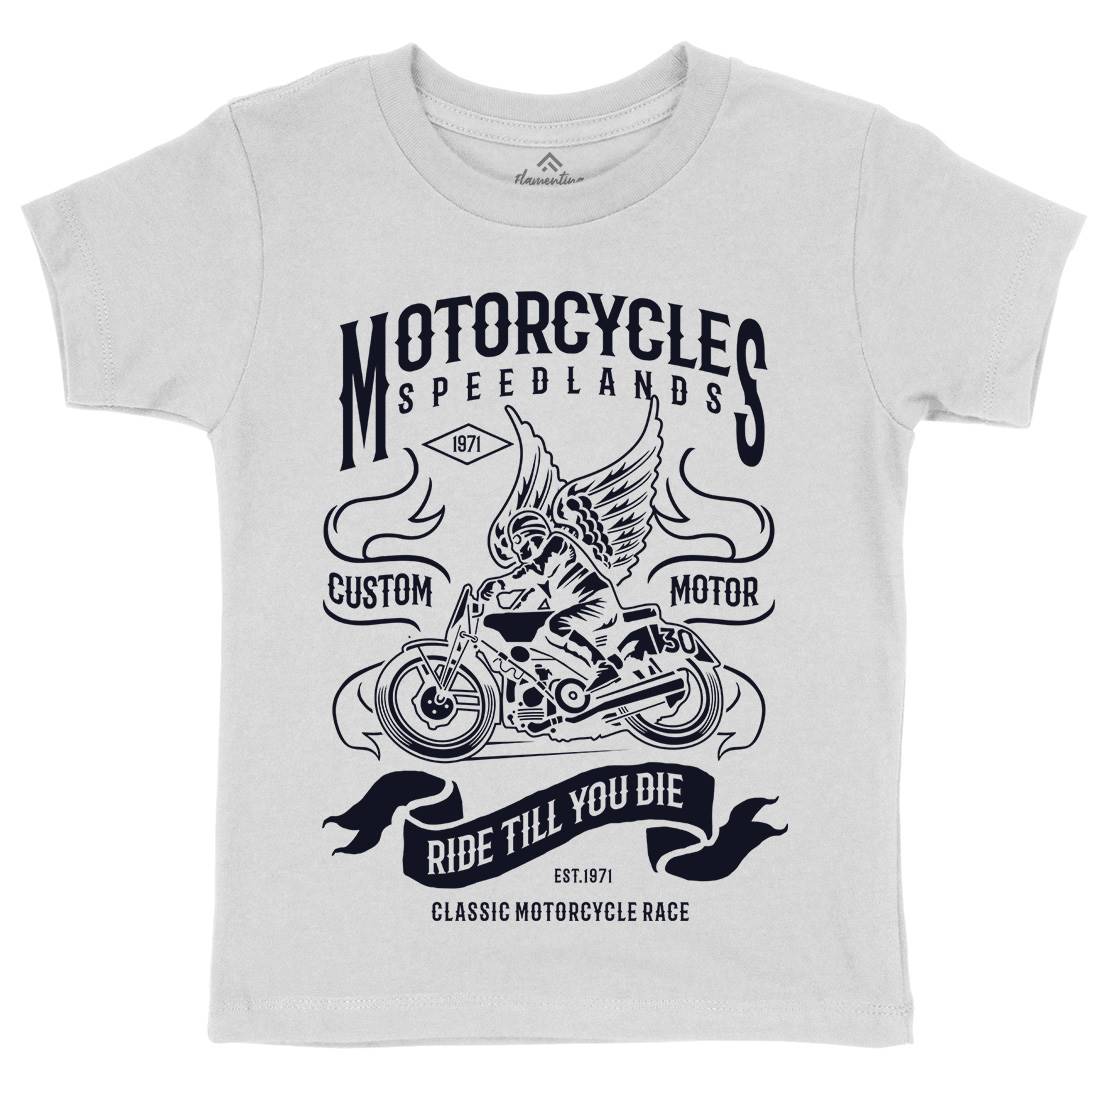 Speed Lands Kids Crew Neck T-Shirt Motorcycles B232